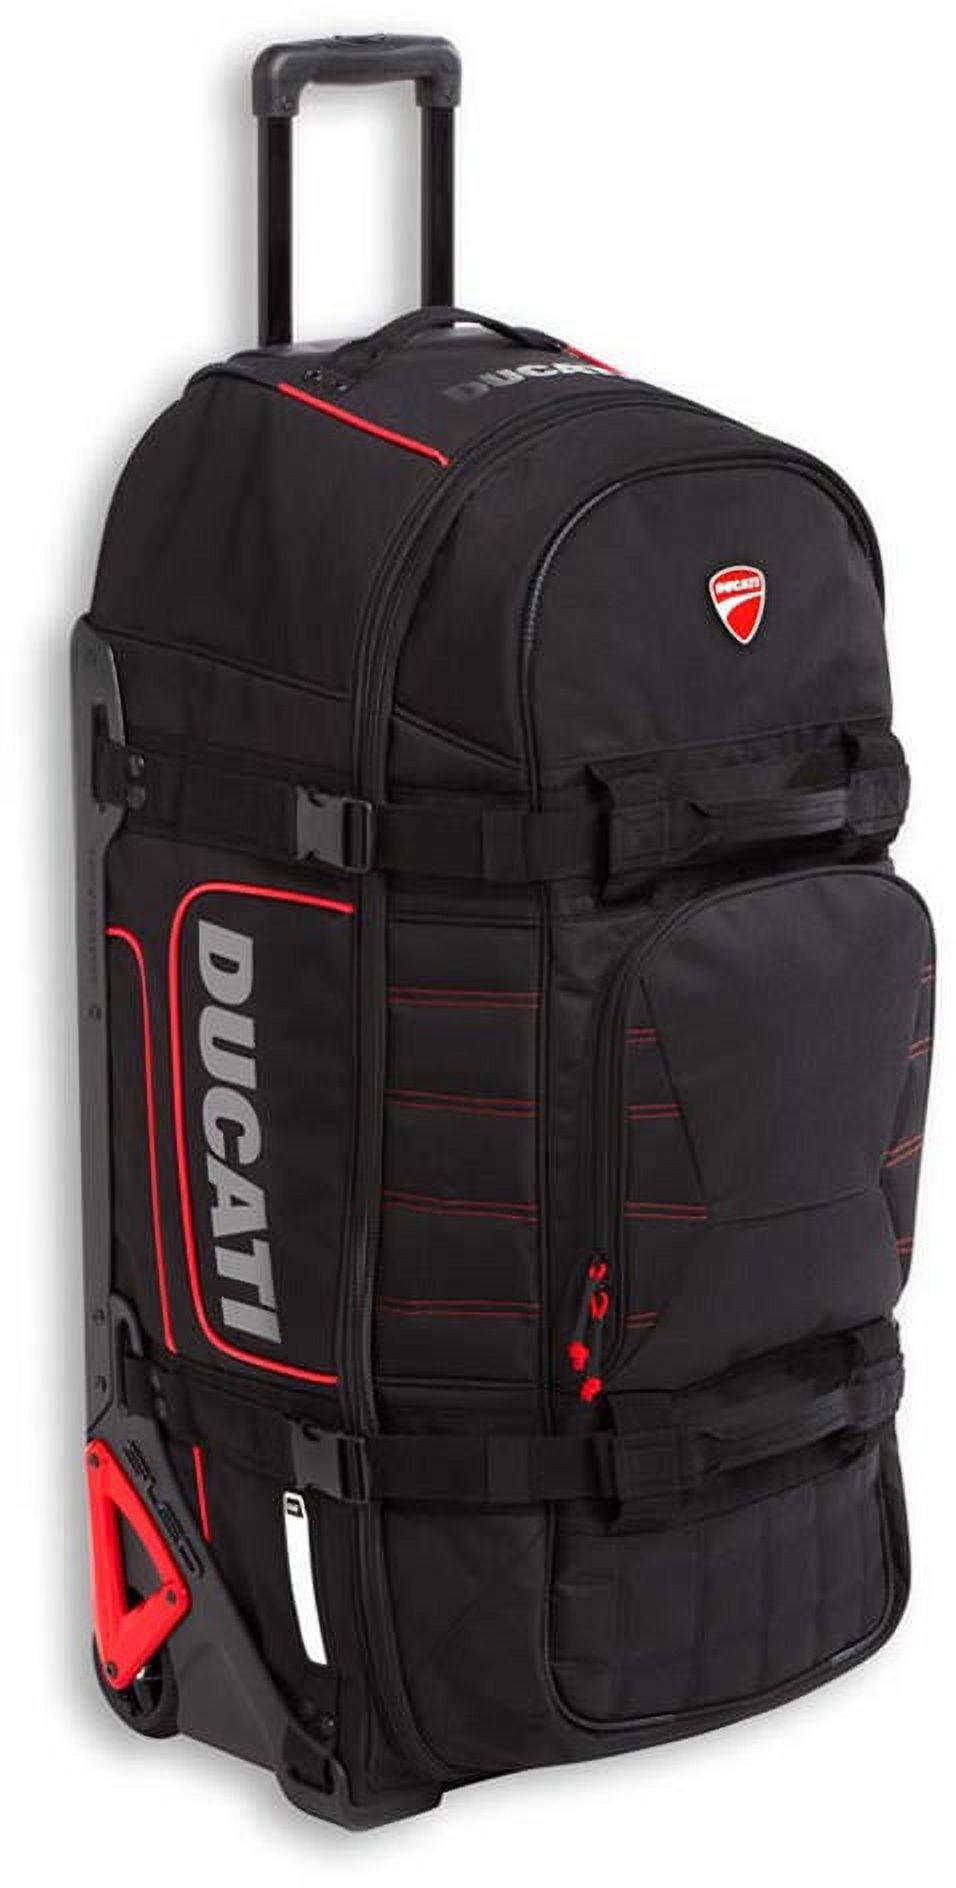 Luggage Tank Bag For DUCATI Supersport 939 950 848 1098 1198 MONSTER 937  950 797 821 1200 Motorcycle Saddle Bag Racing Backpack - AliExpress